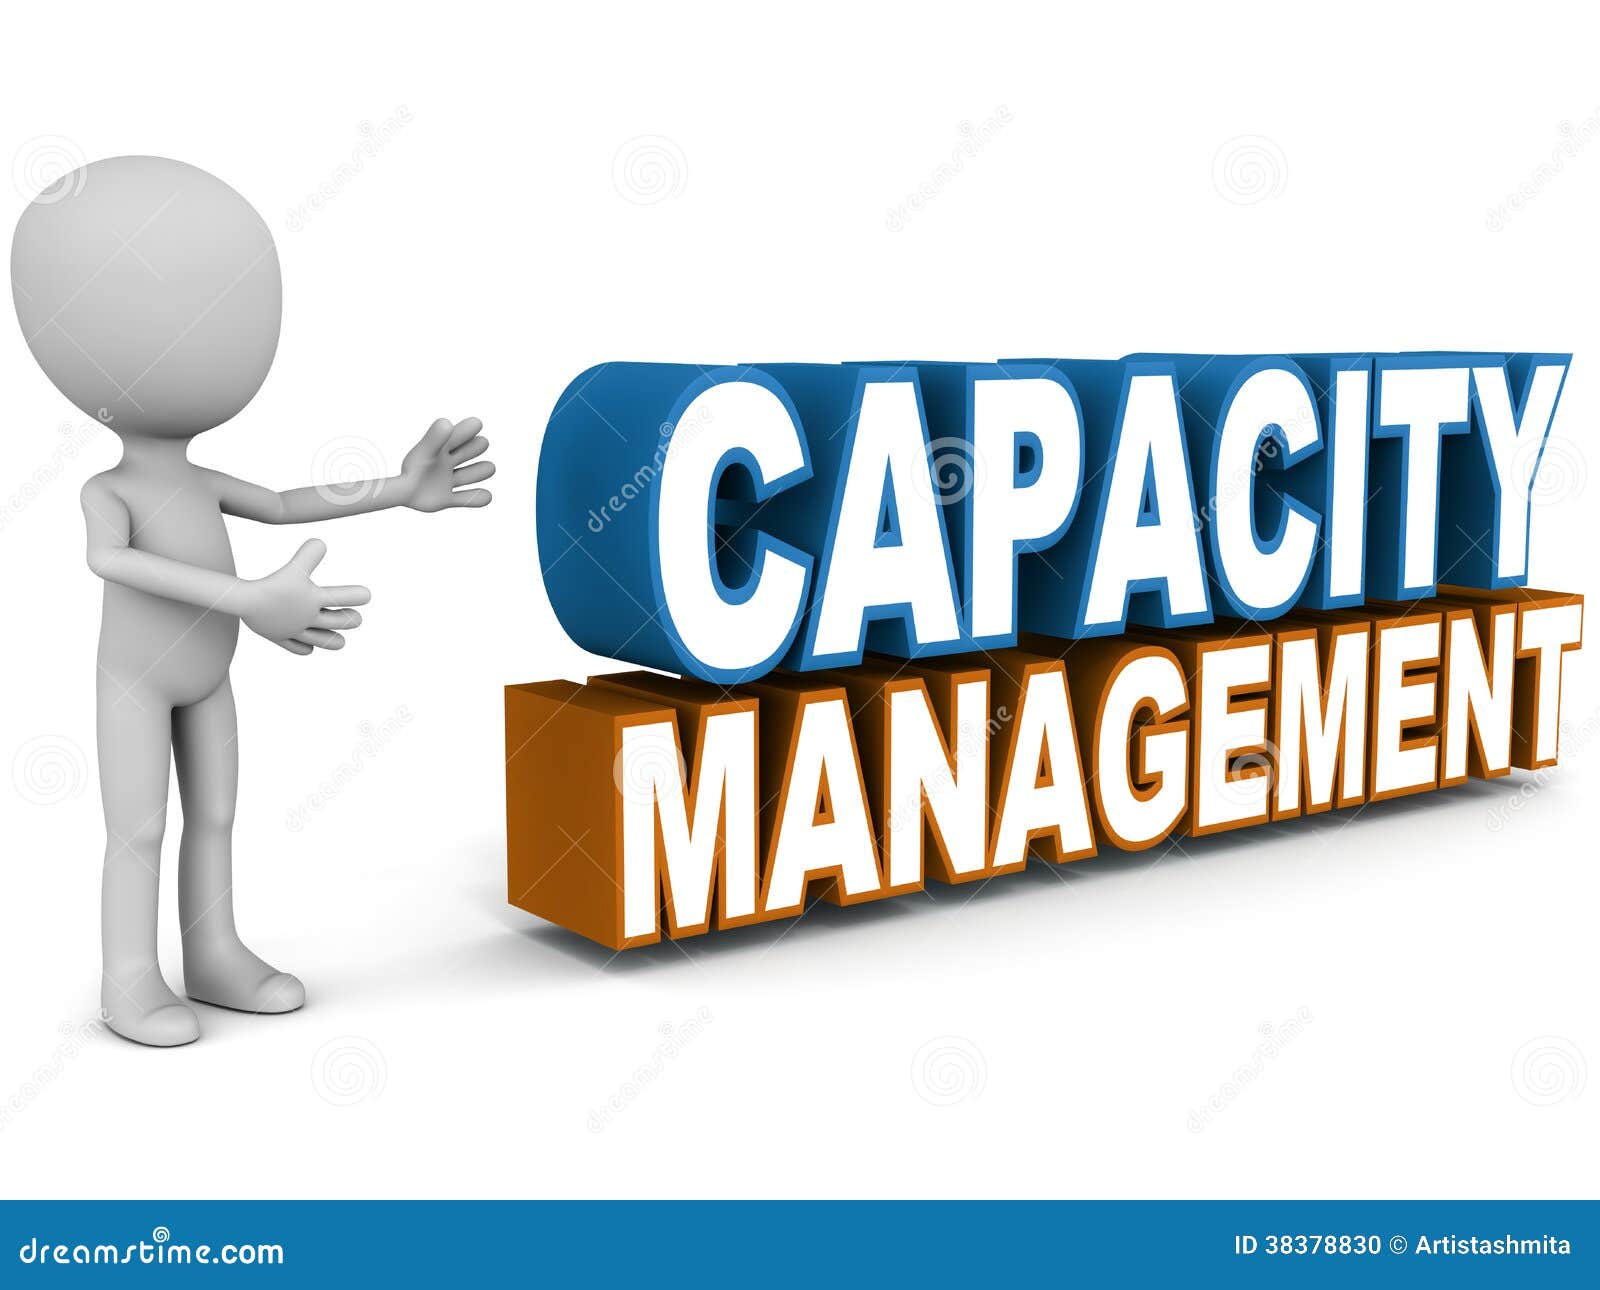 capacity management